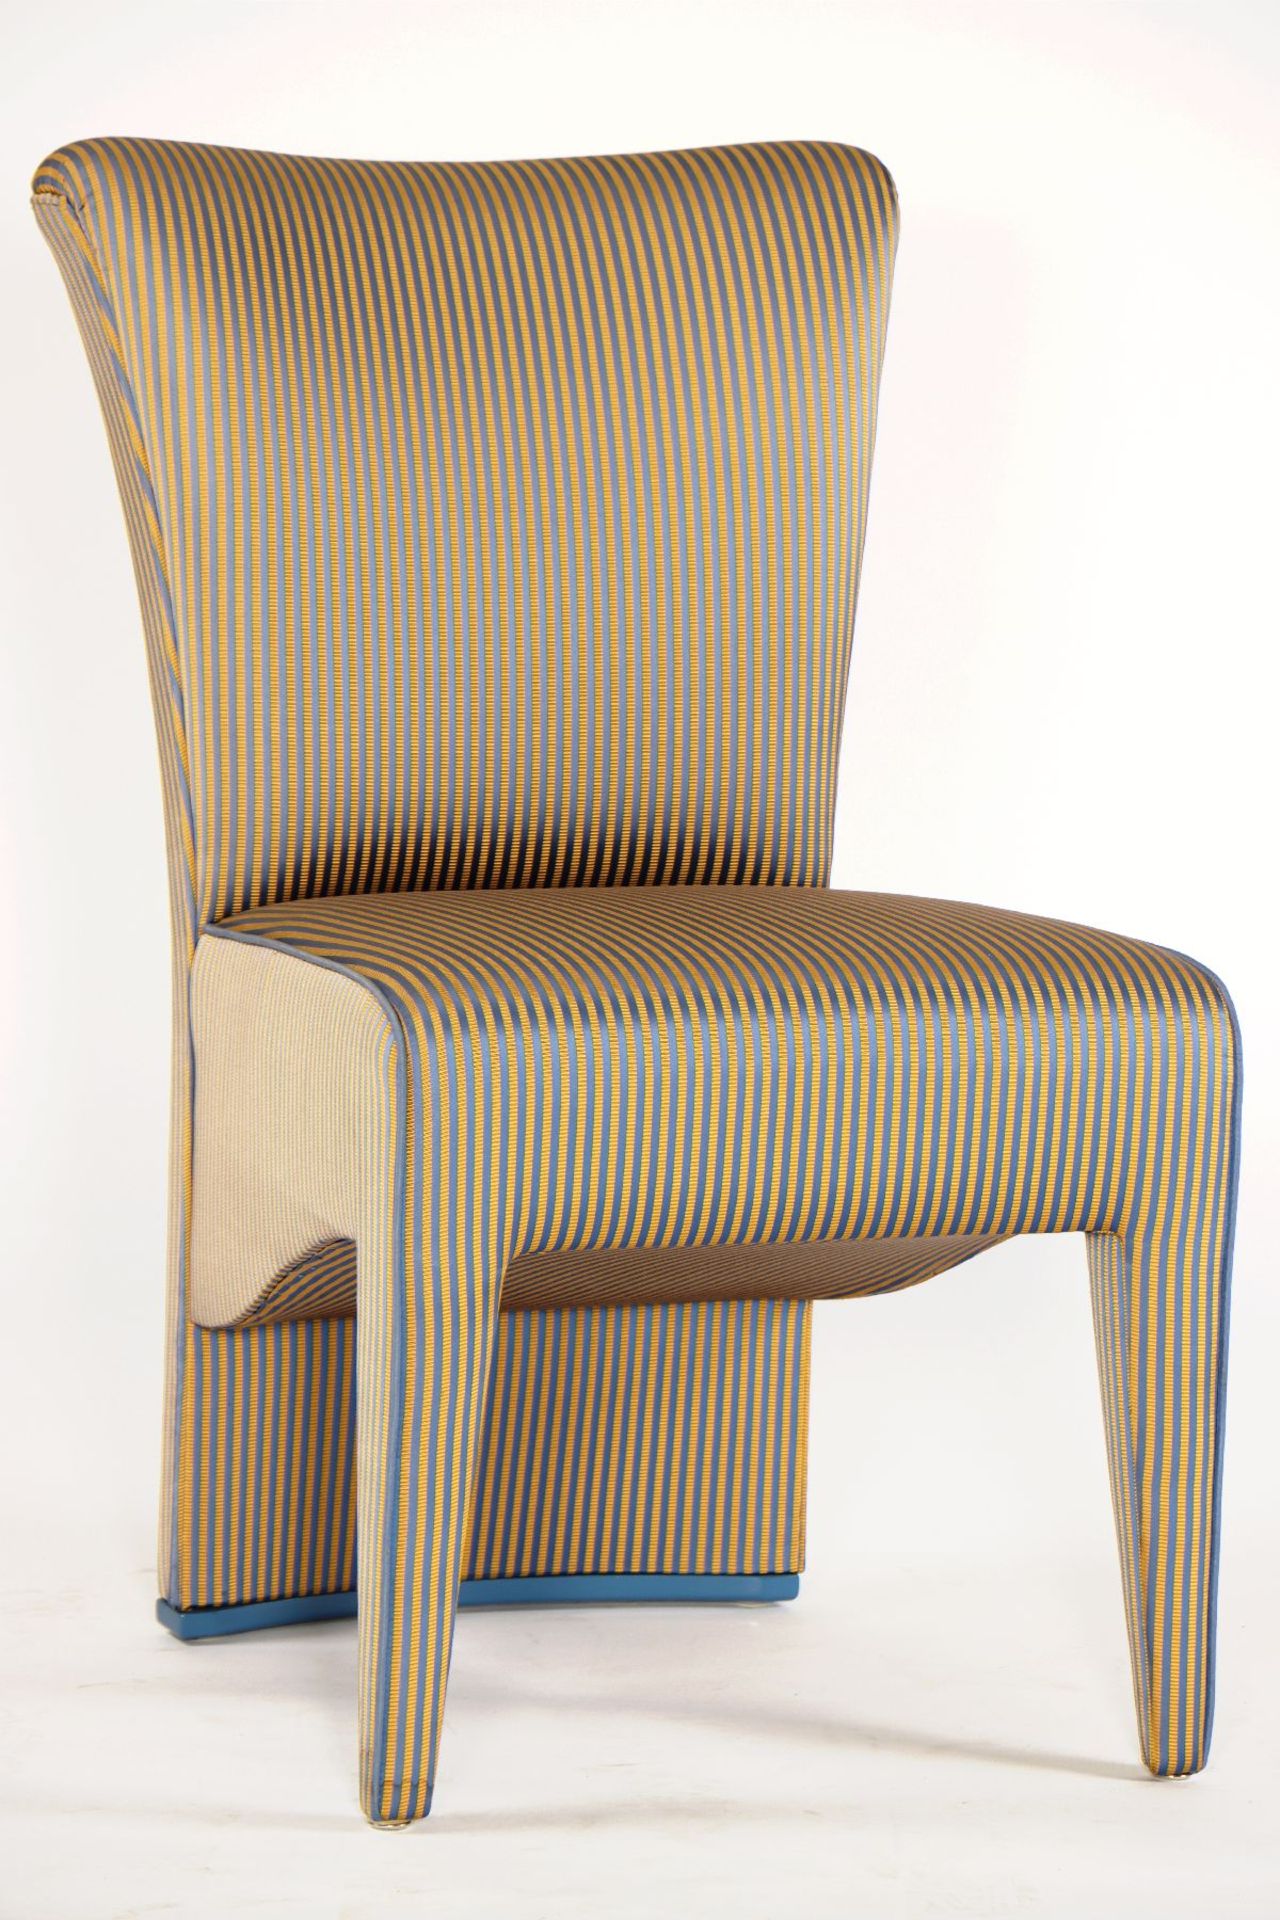 8 Stühle, Korpus Holz, hochwertige glänze Stoffbezüge - Image 2 of 4